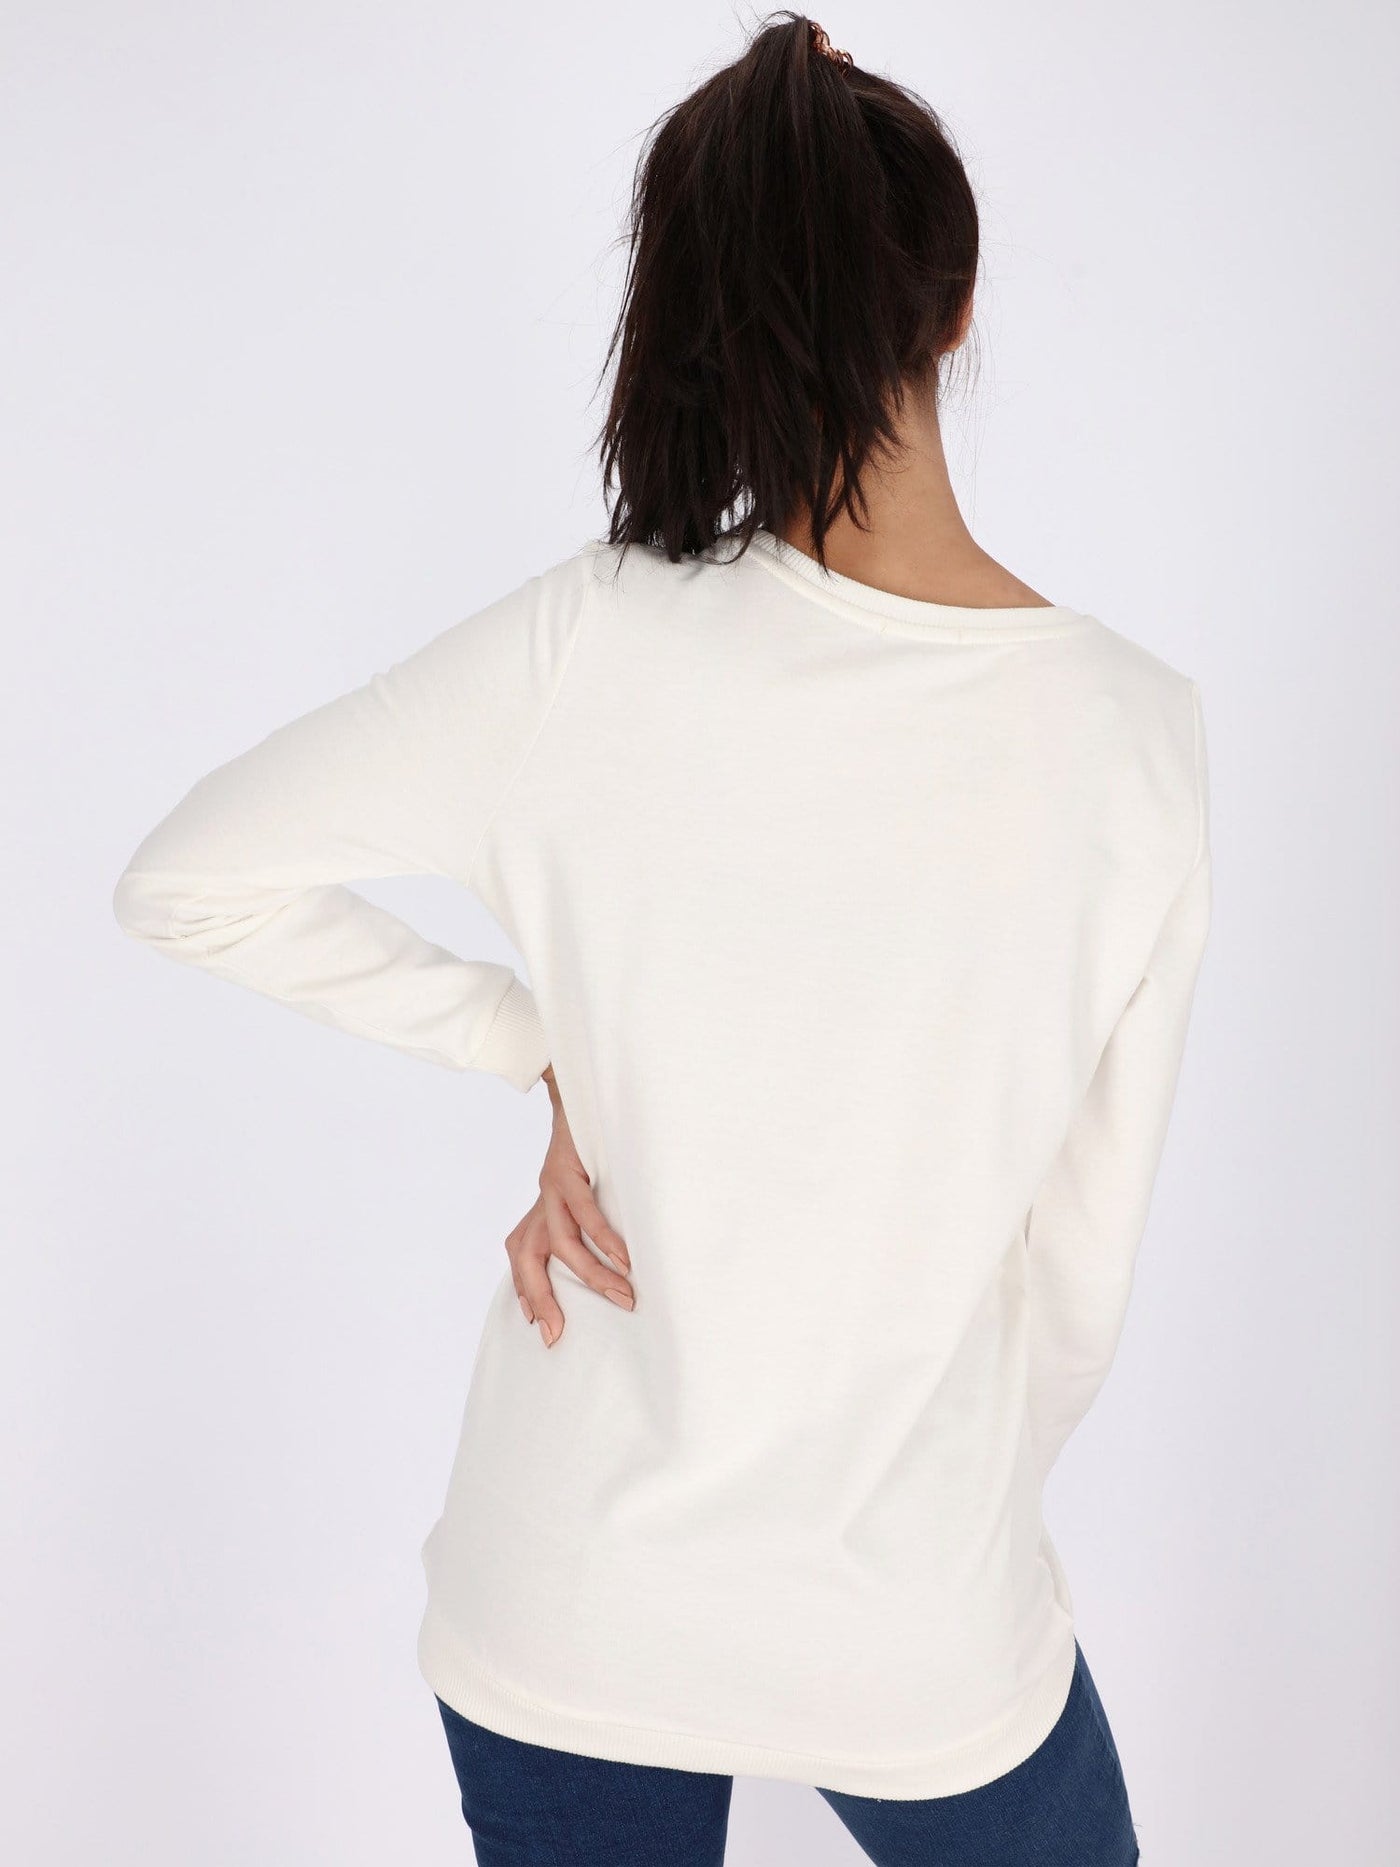 OR Tops & Blouses Hakuna Matata Long Sleeve T-shirt